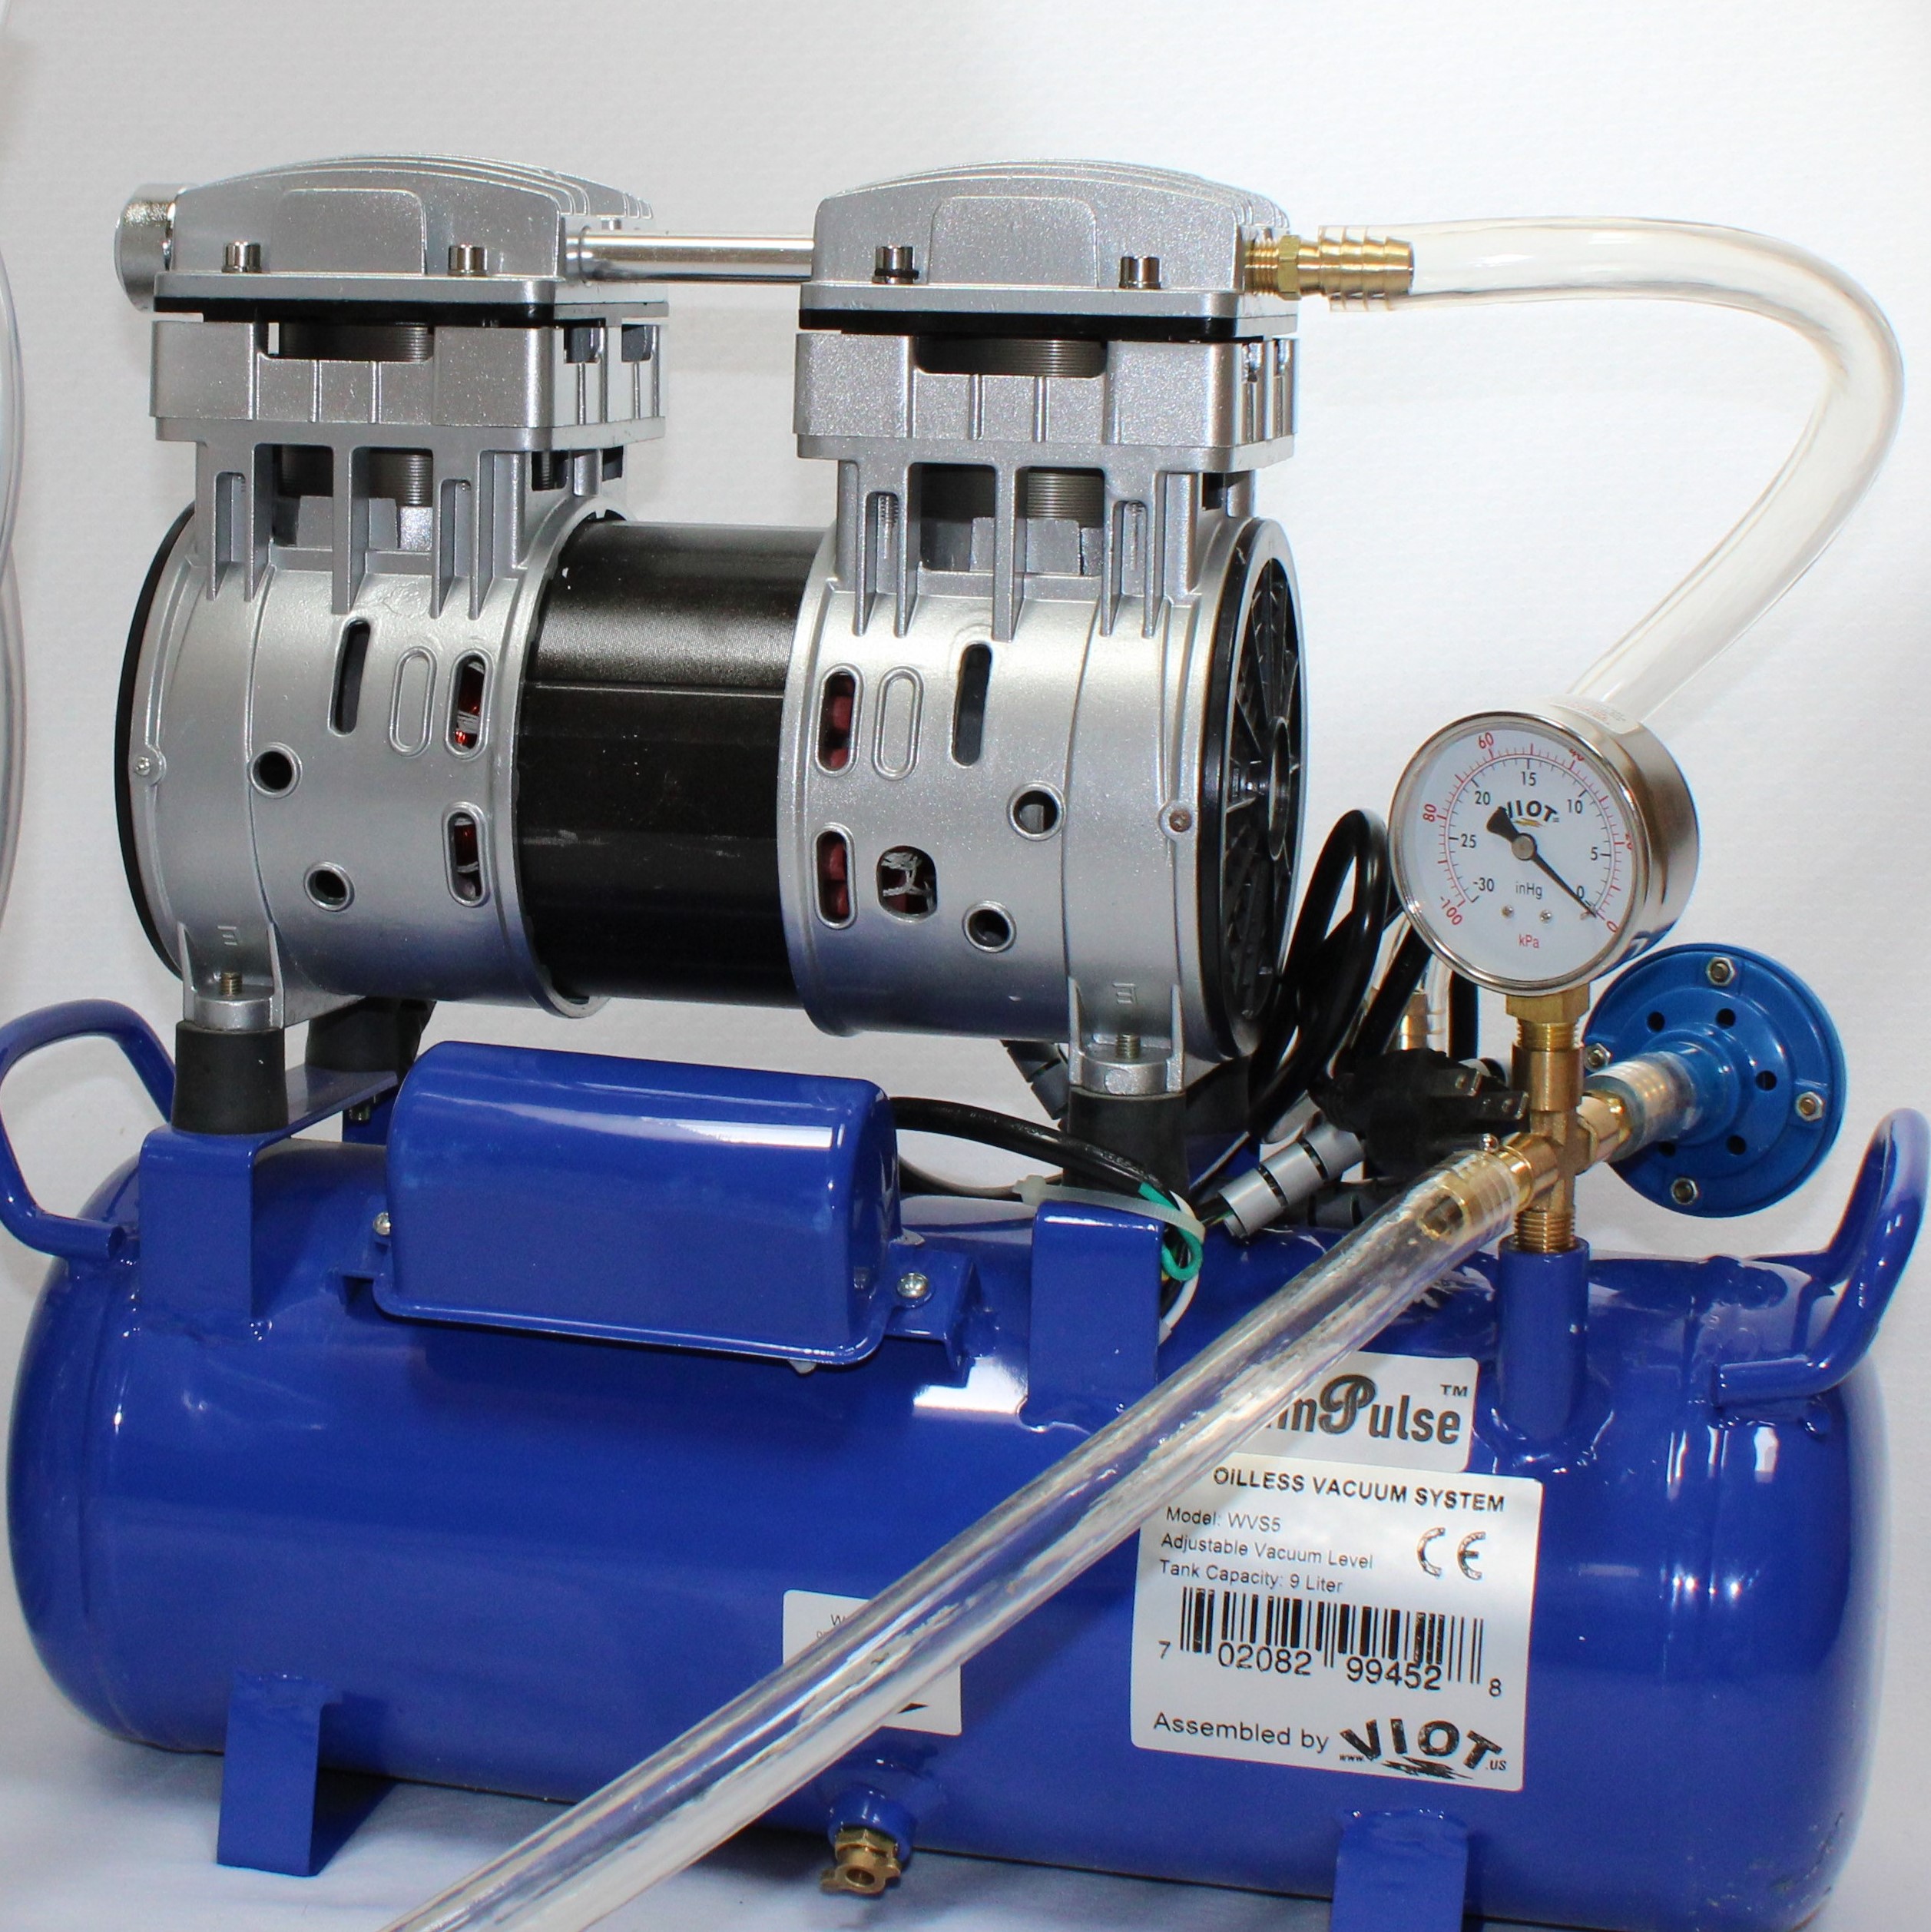 WVS5b:oil-less free vacuum pump Twin piston Controls Tank Automation system 5.5 CFM